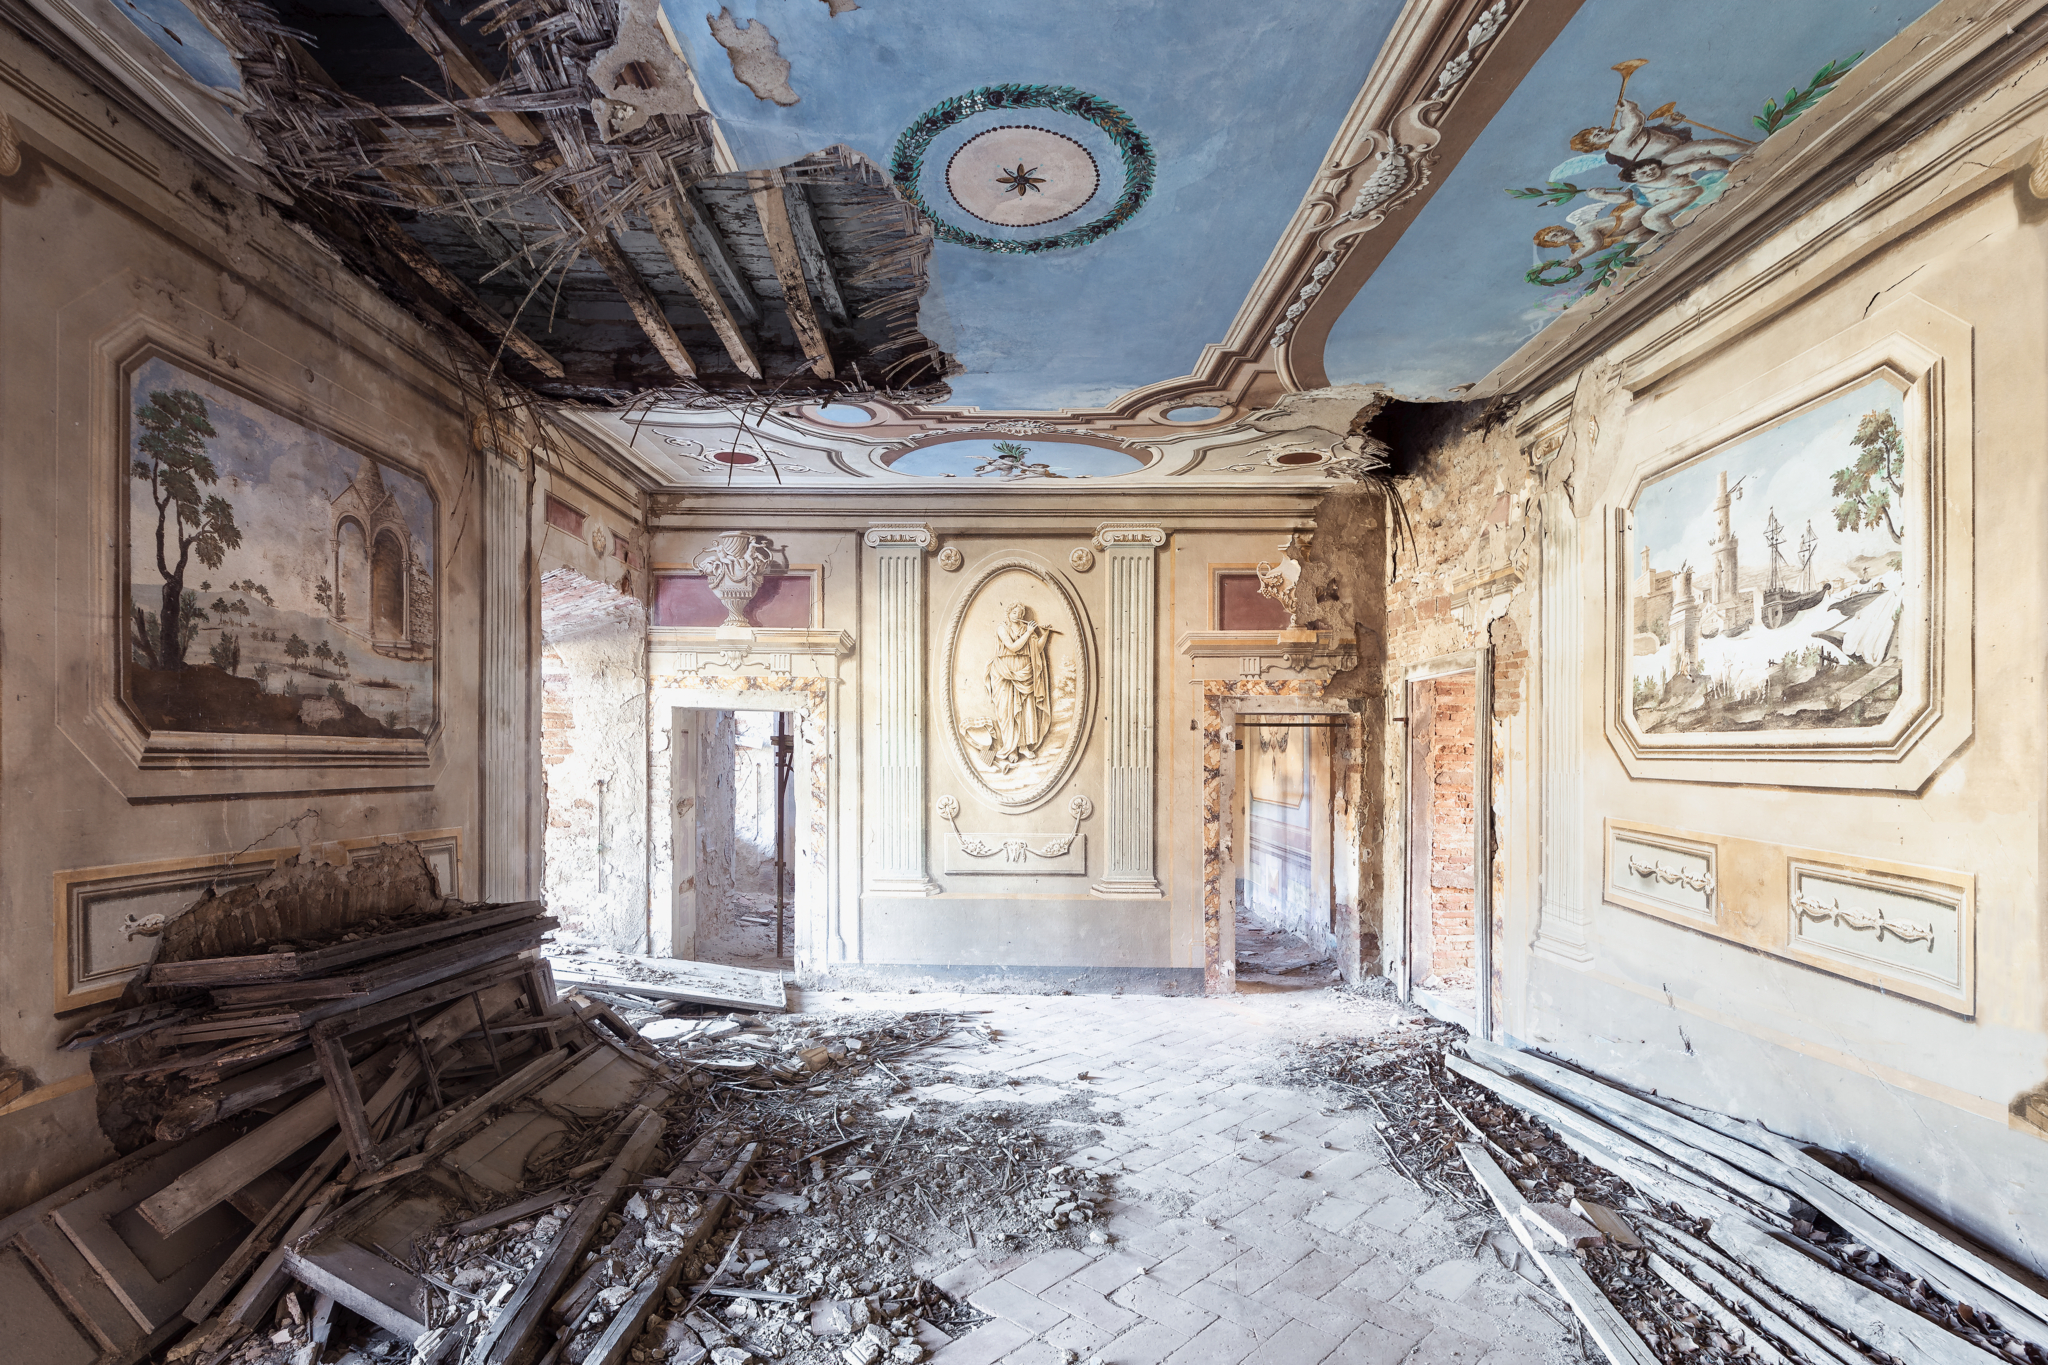 Illusione - Abandoned Villa in Italy